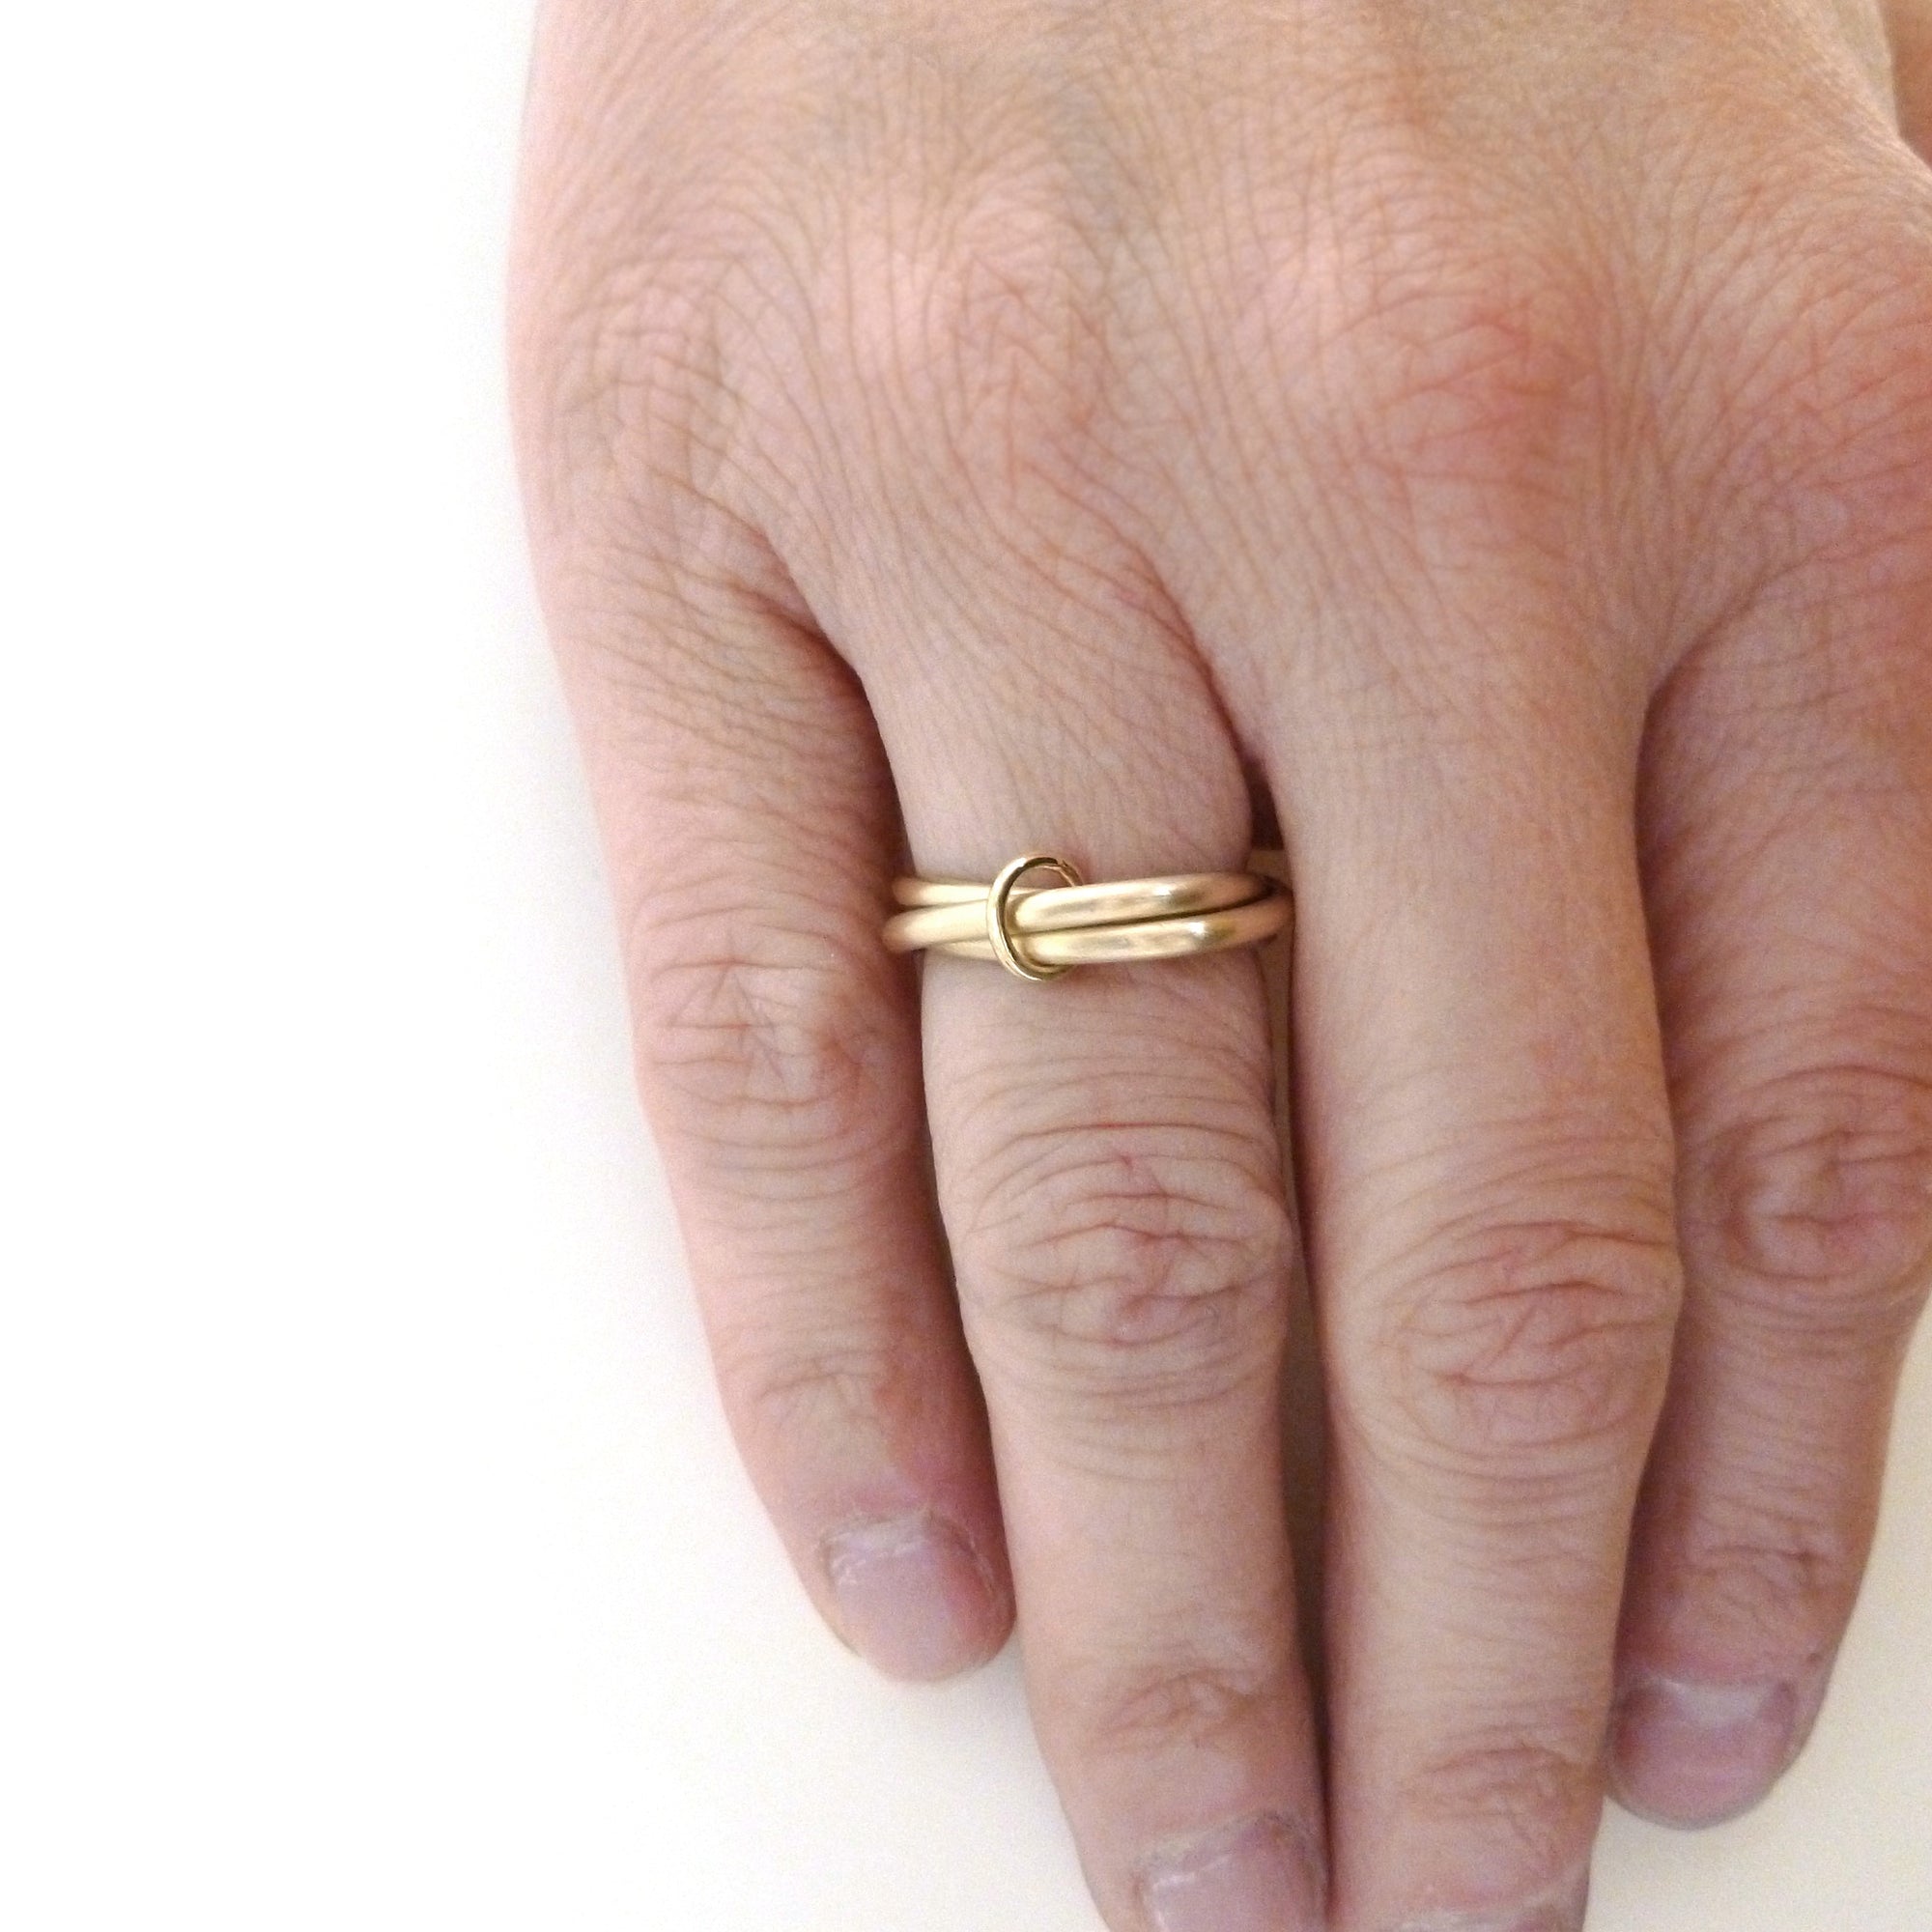 linked gold wedding ring, handmade in UK by designer and maker Sue Lane